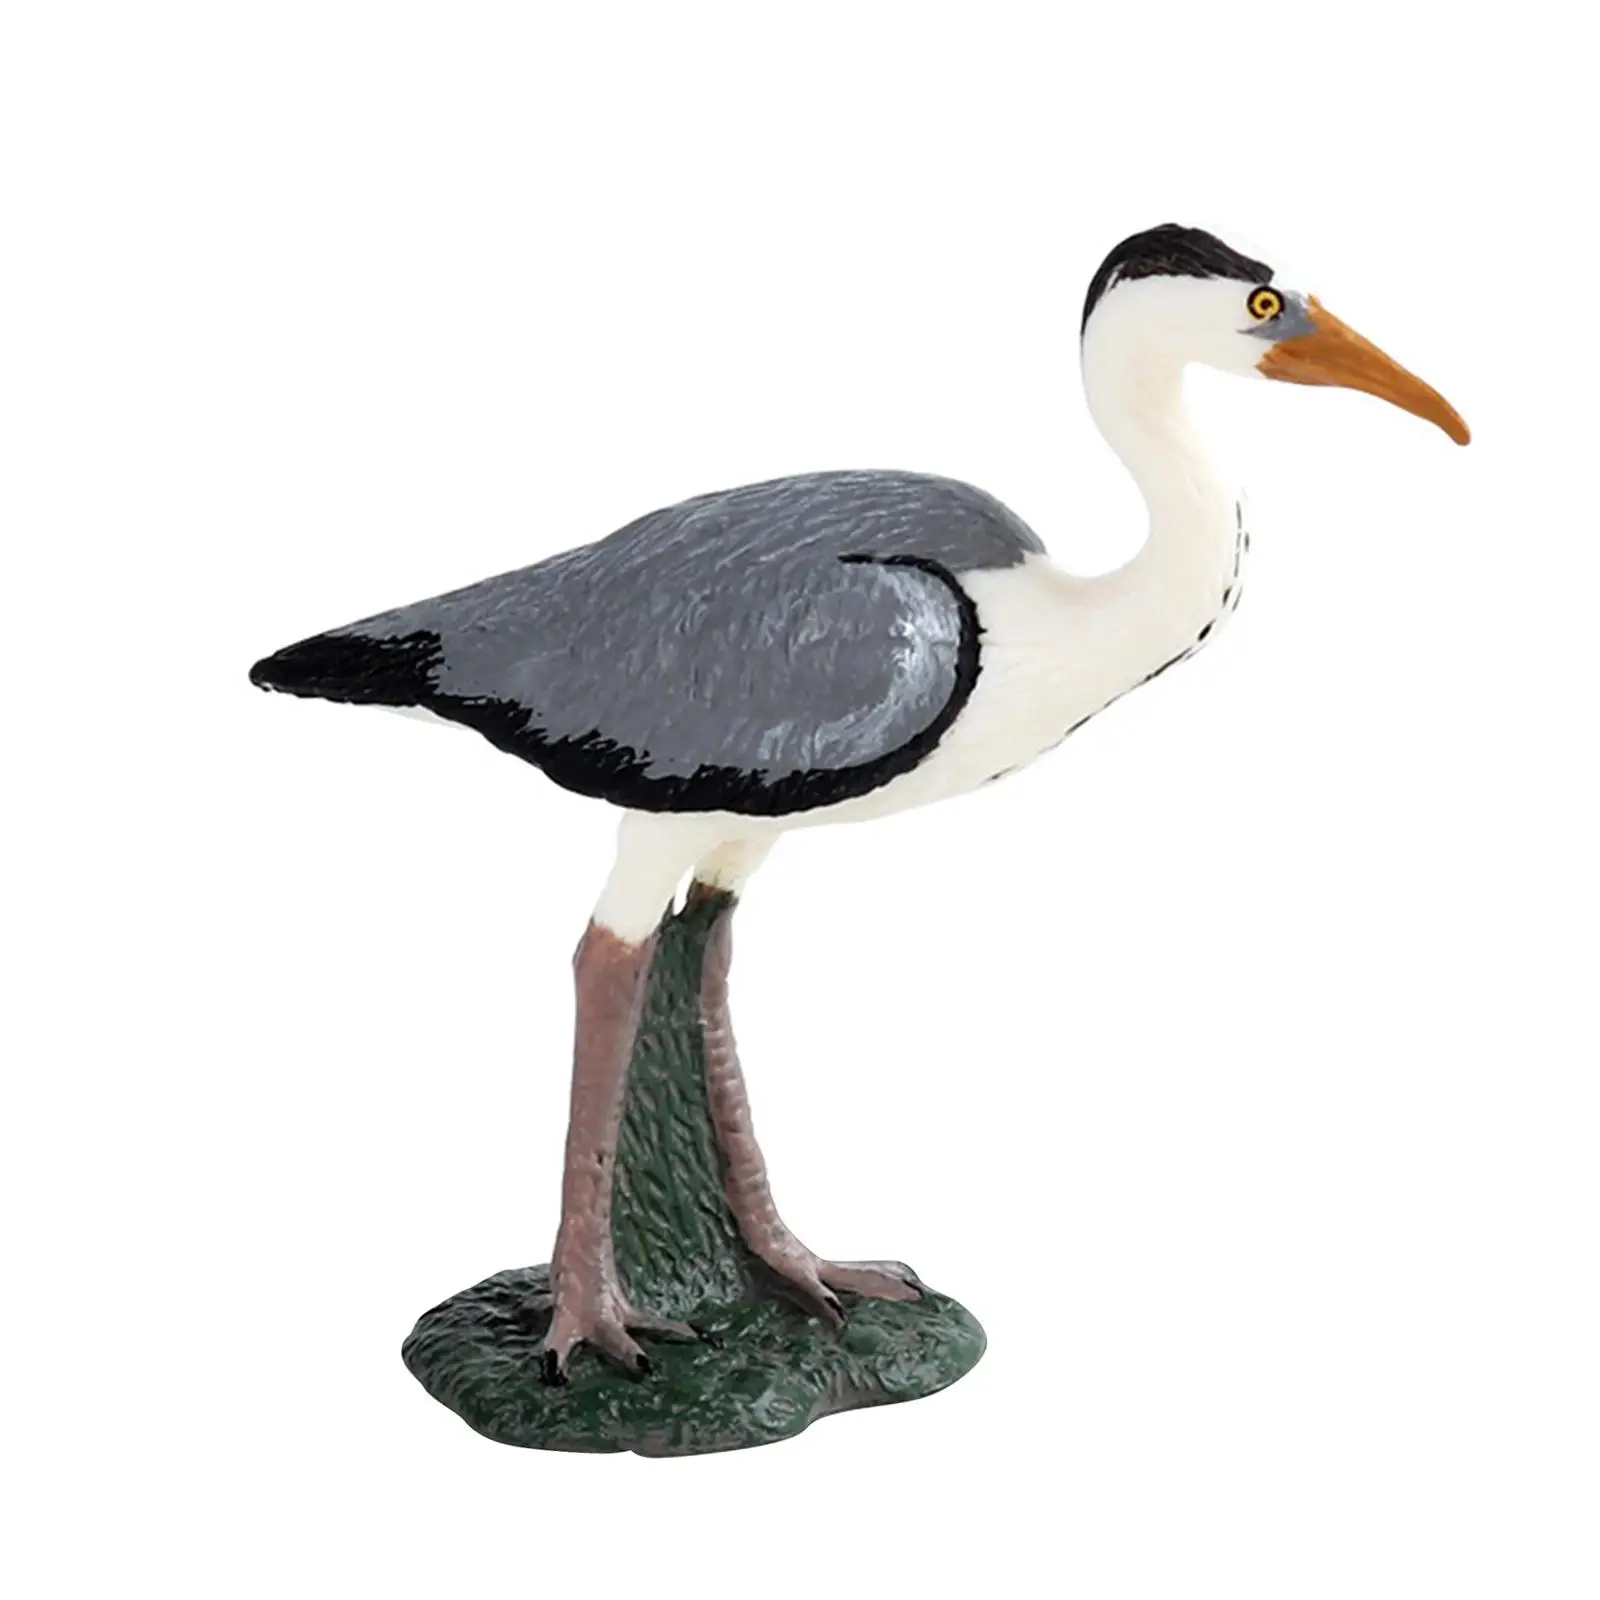 Simulation Bird Statue Sculpture Bird Figurines Animals Birds Model DIY Crafts for Lawn Home Outdoor Decor Ornament